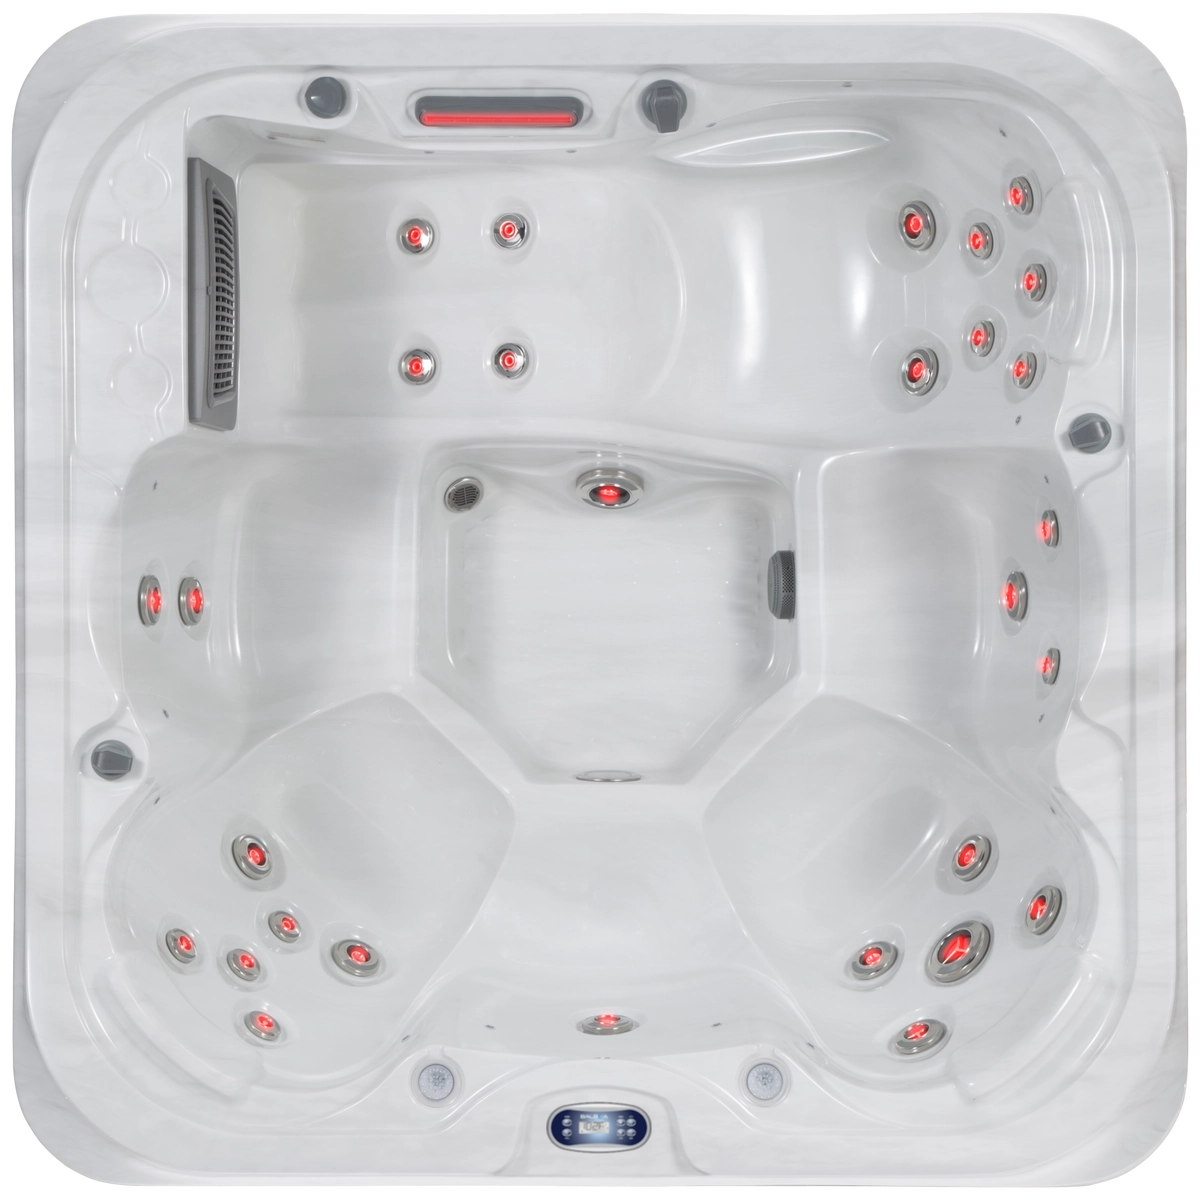 Galaxy - 6 Person Plug & Play Hot Tub Spa